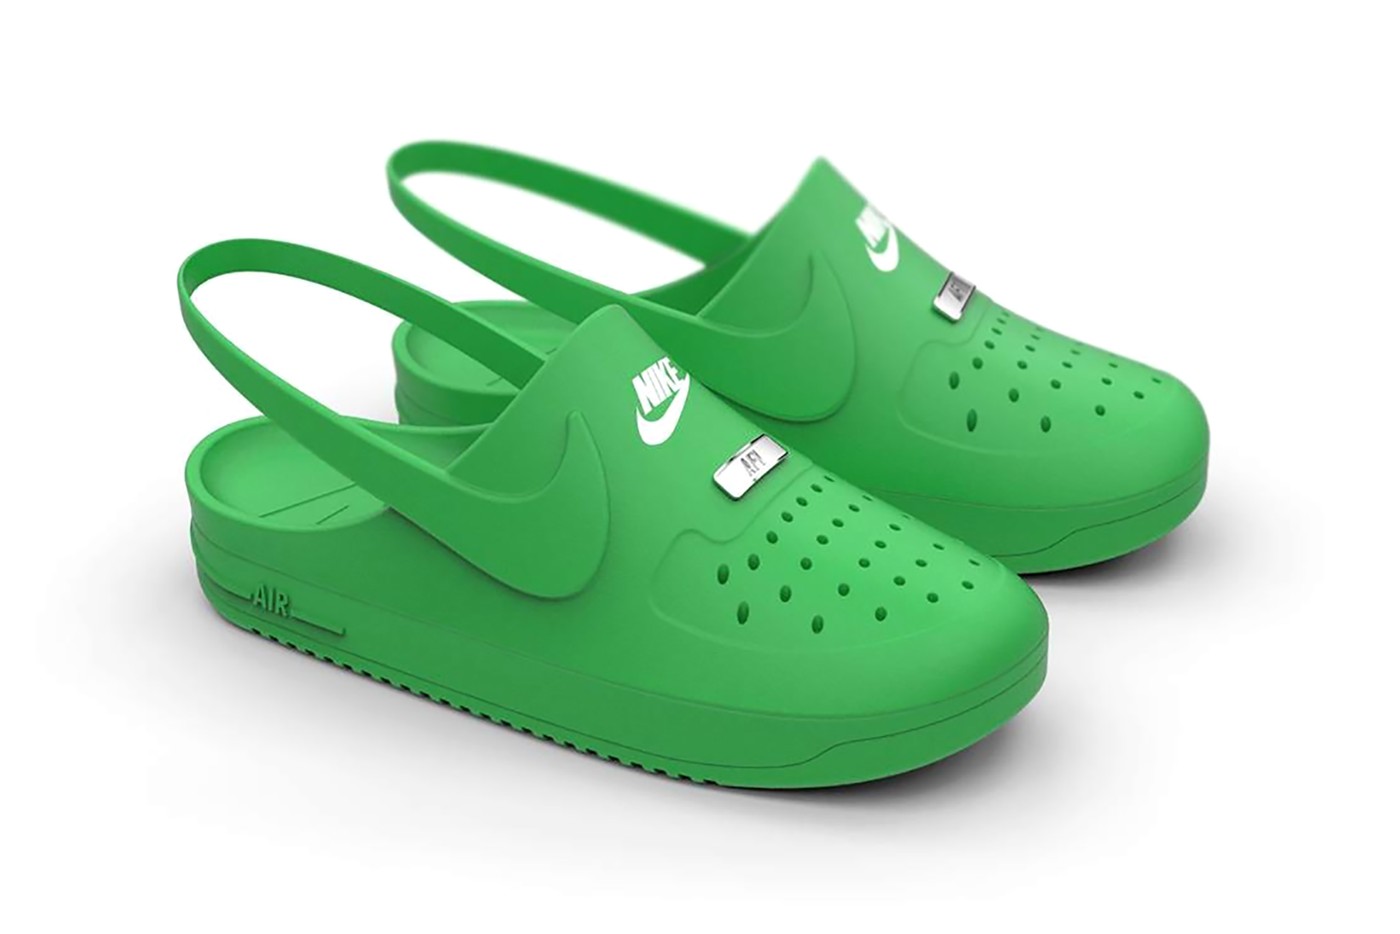 nike crocs collaboration air force 1 clogs hybrid unofficial Keegan McDaniel shoes design